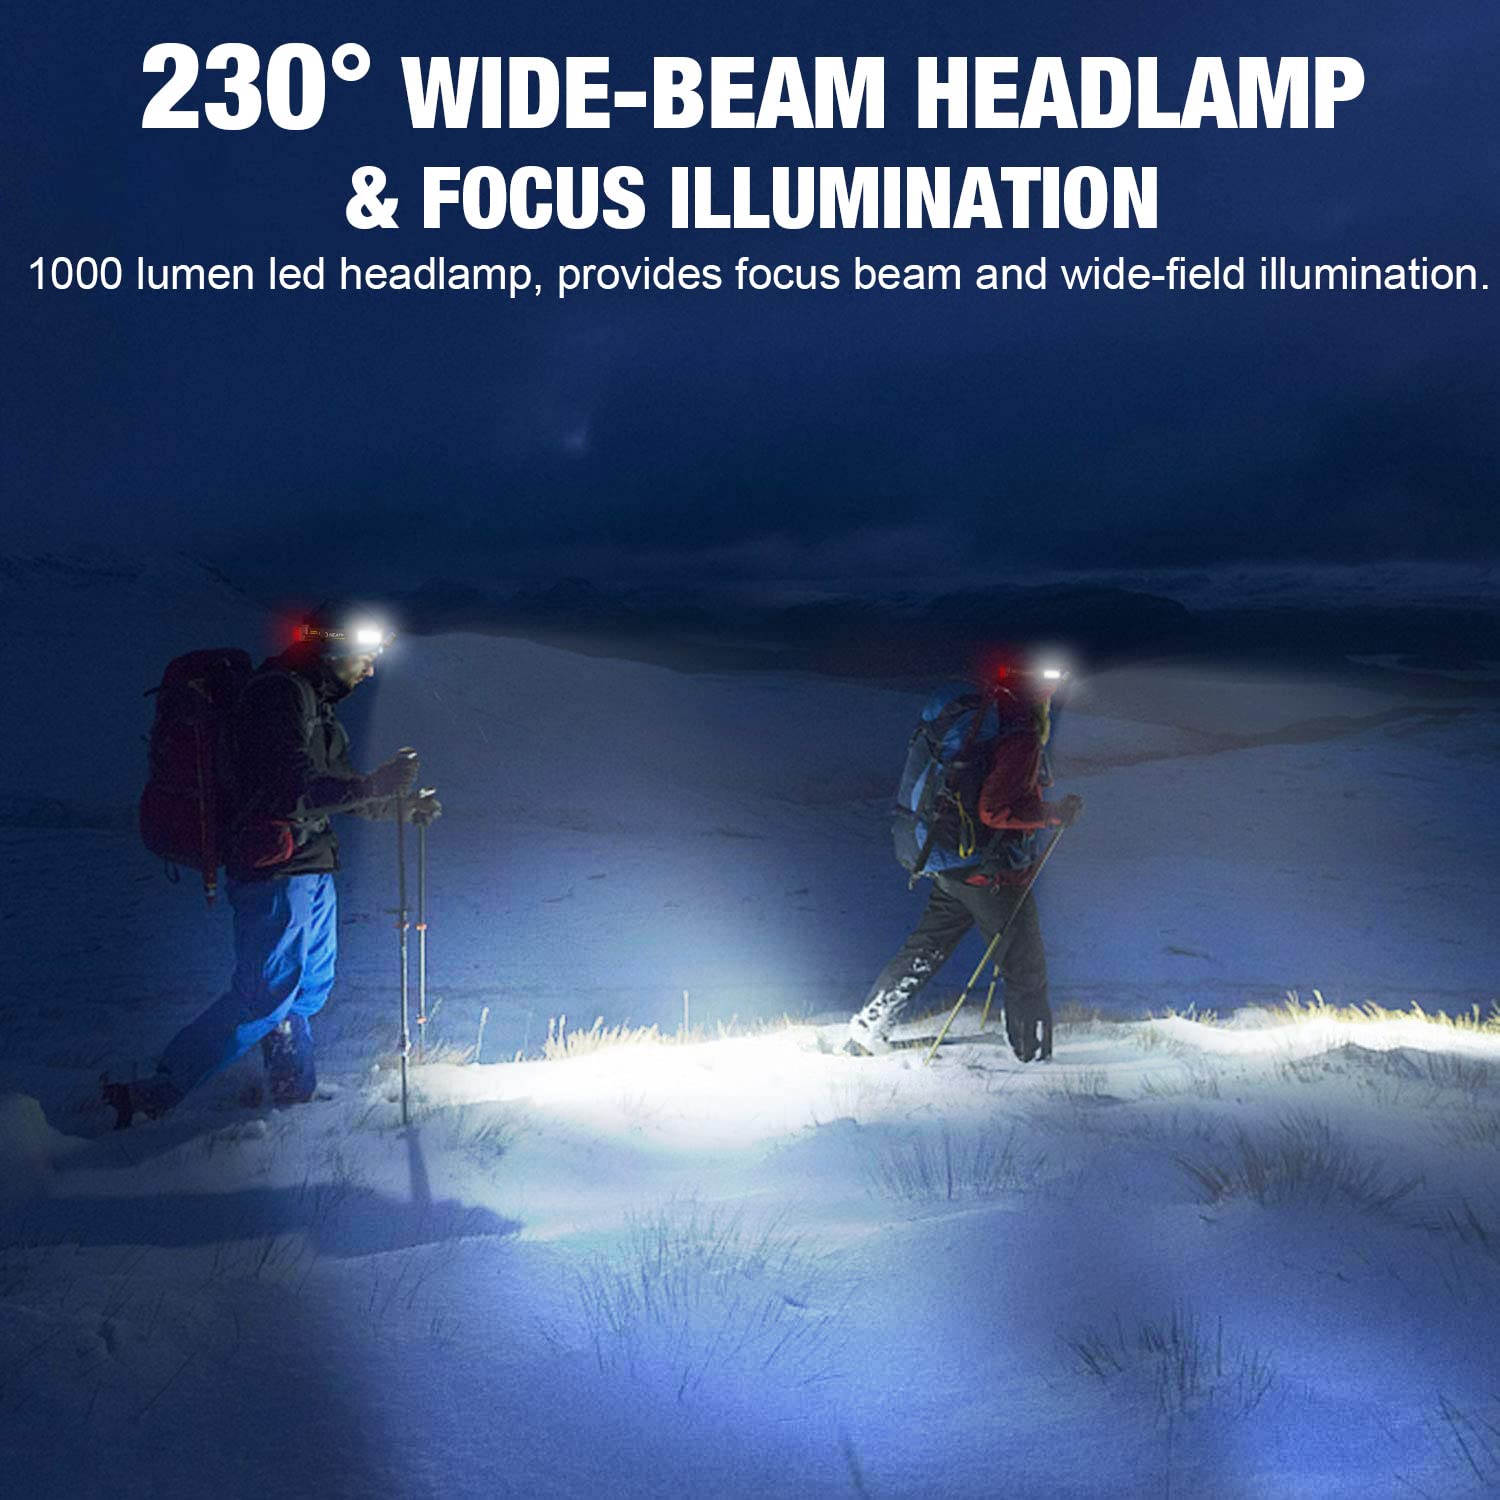 Spriak LED Headlamp, 1000lumens 230° Widebeam Headlight, USB Rechargeable HeadLamp with Red Taillight, Lightweight Waterproof Headband Light for Camping Running Hiking, Hard Hat Headlamp